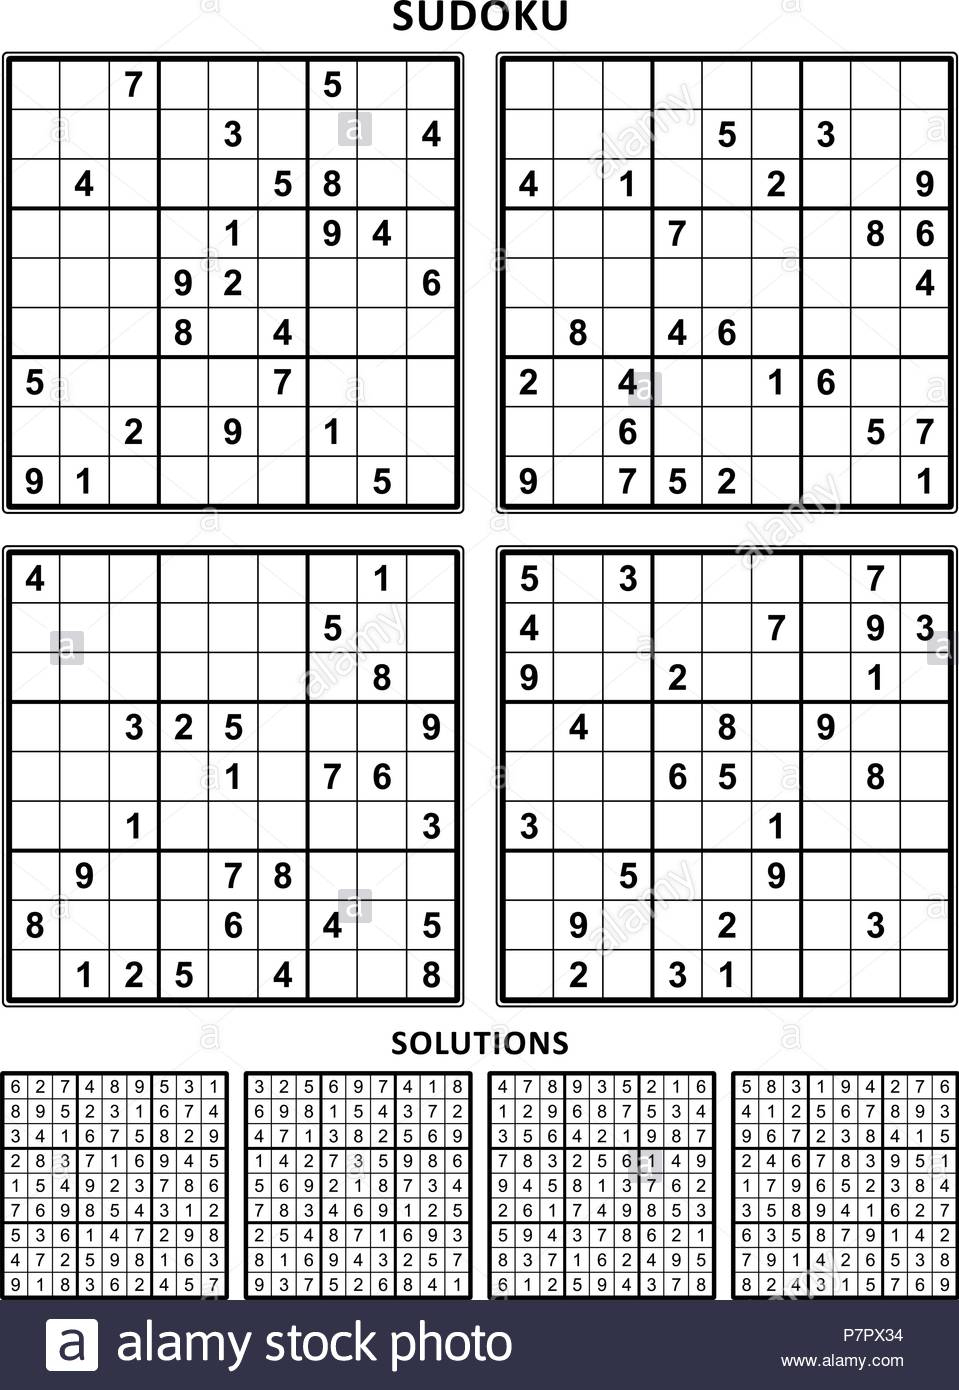 Free Printable Jigsaw Sudoku 4 Per Page